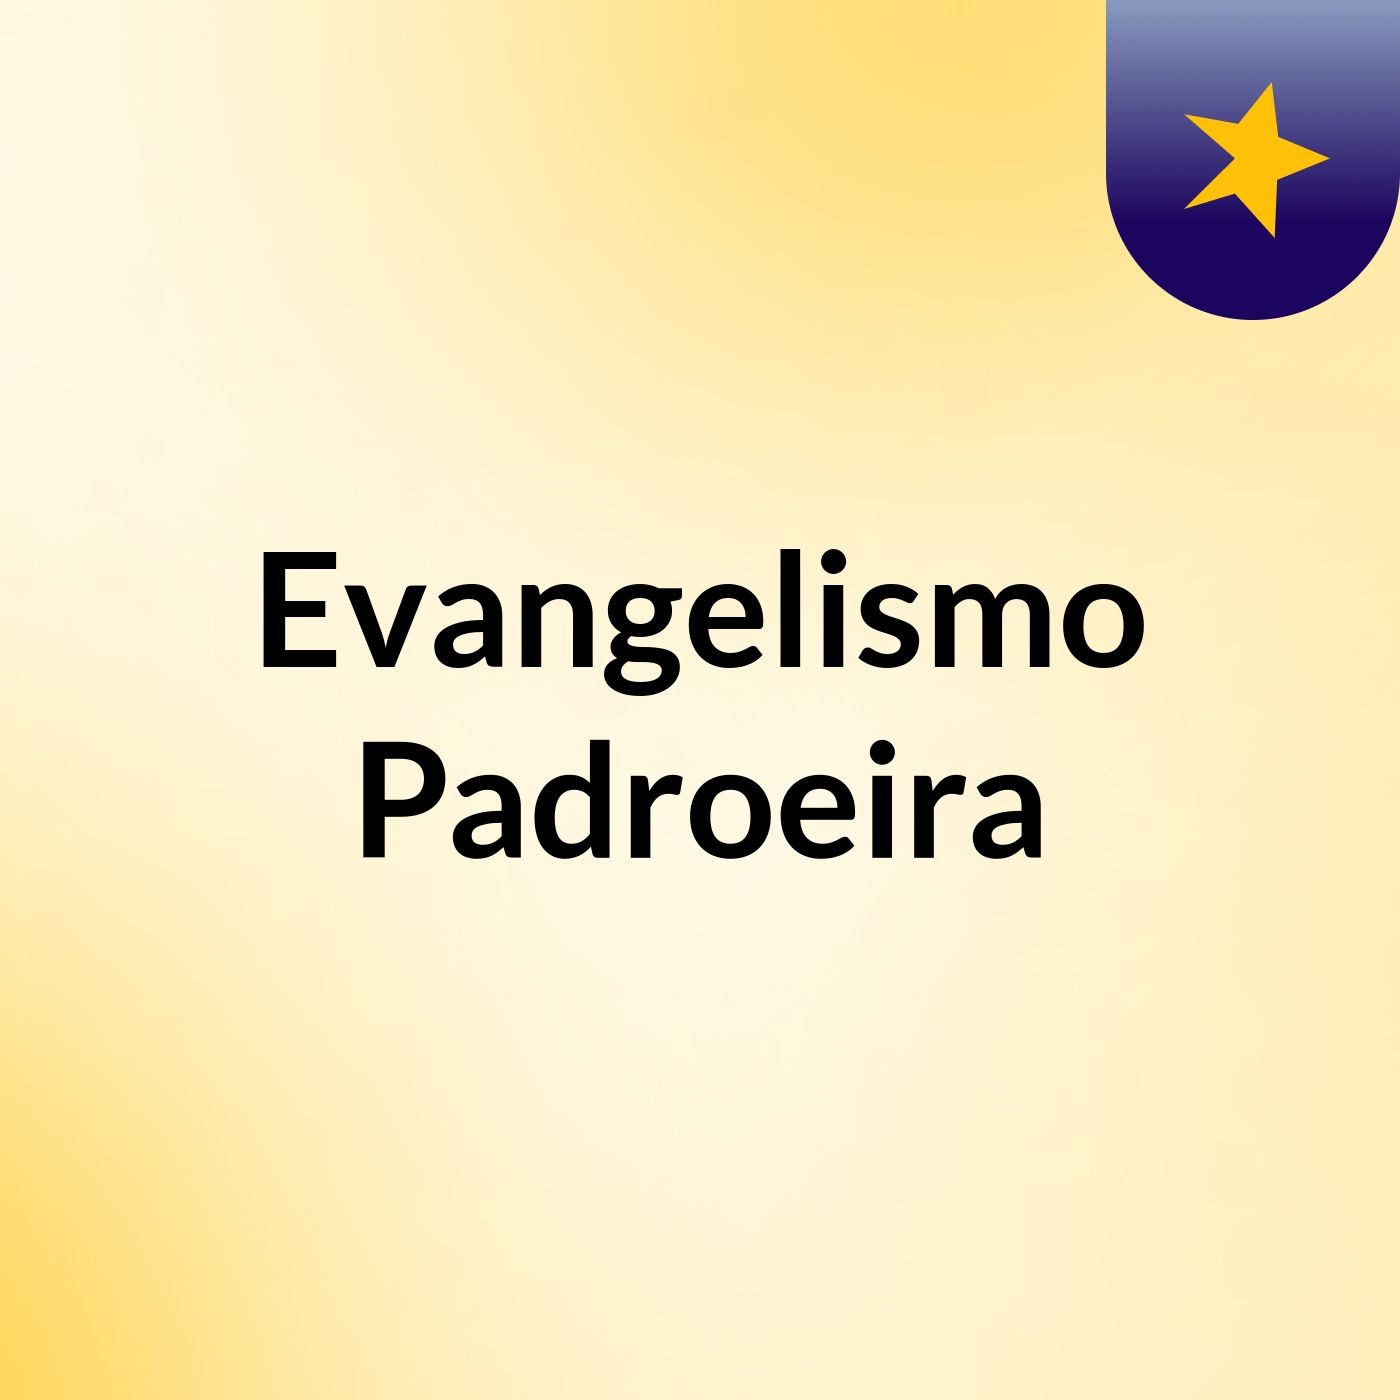 Evangelismo Padroeira